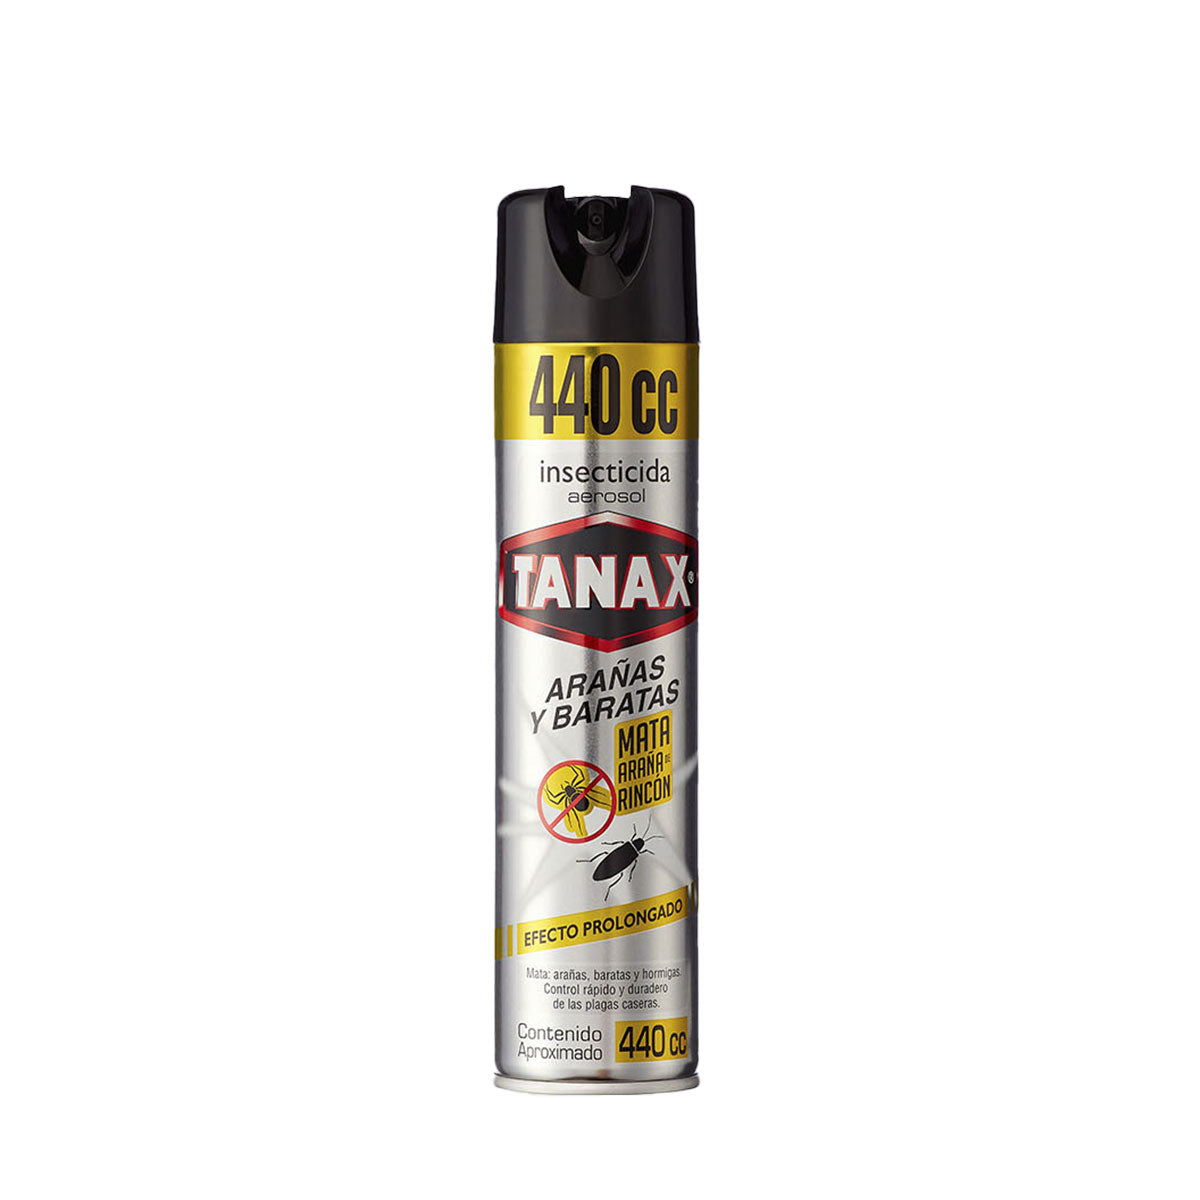 TANAX-Insecticida-Aranas-Baratas-440cc.jpg